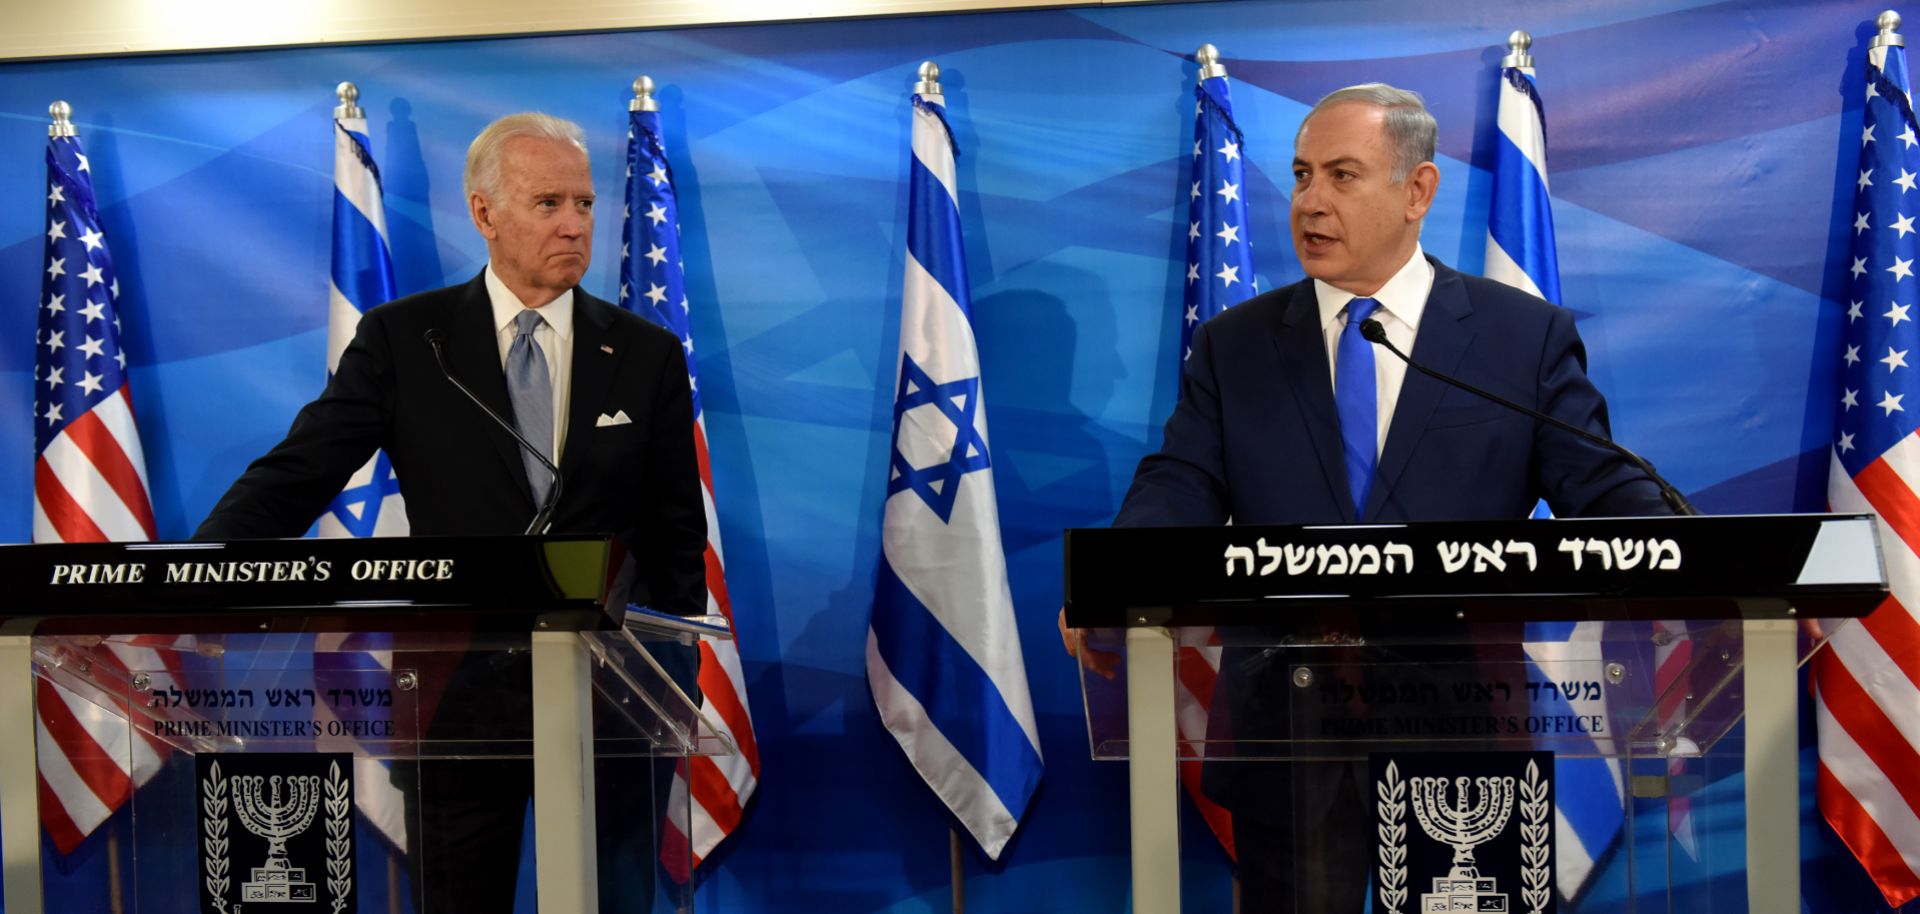 Then-U.S. Vice President Joe Biden (left) listens to Israeli Prime Minister Benjamin Netanyahu talk during a joint press conference in Jerusalem, Israel, on March 9, 2016.